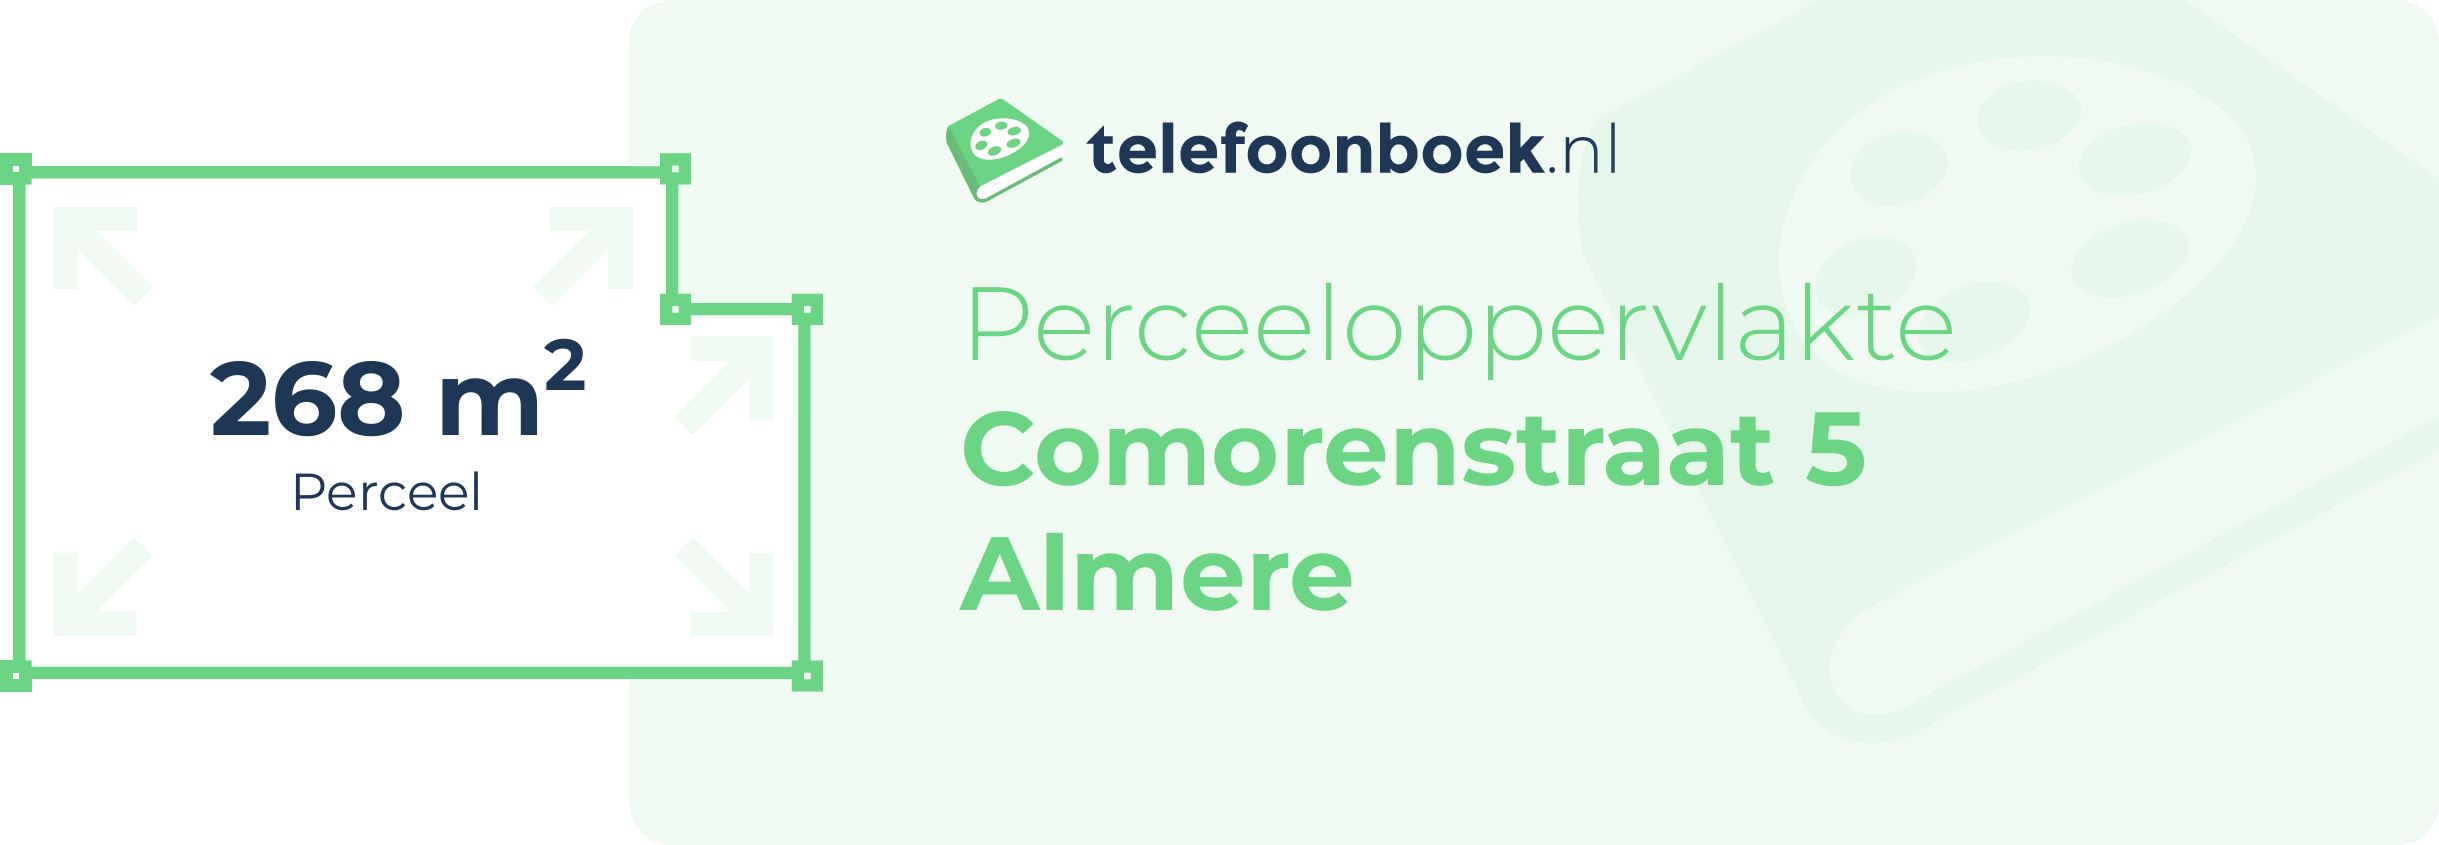 Perceeloppervlakte Comorenstraat 5 Almere